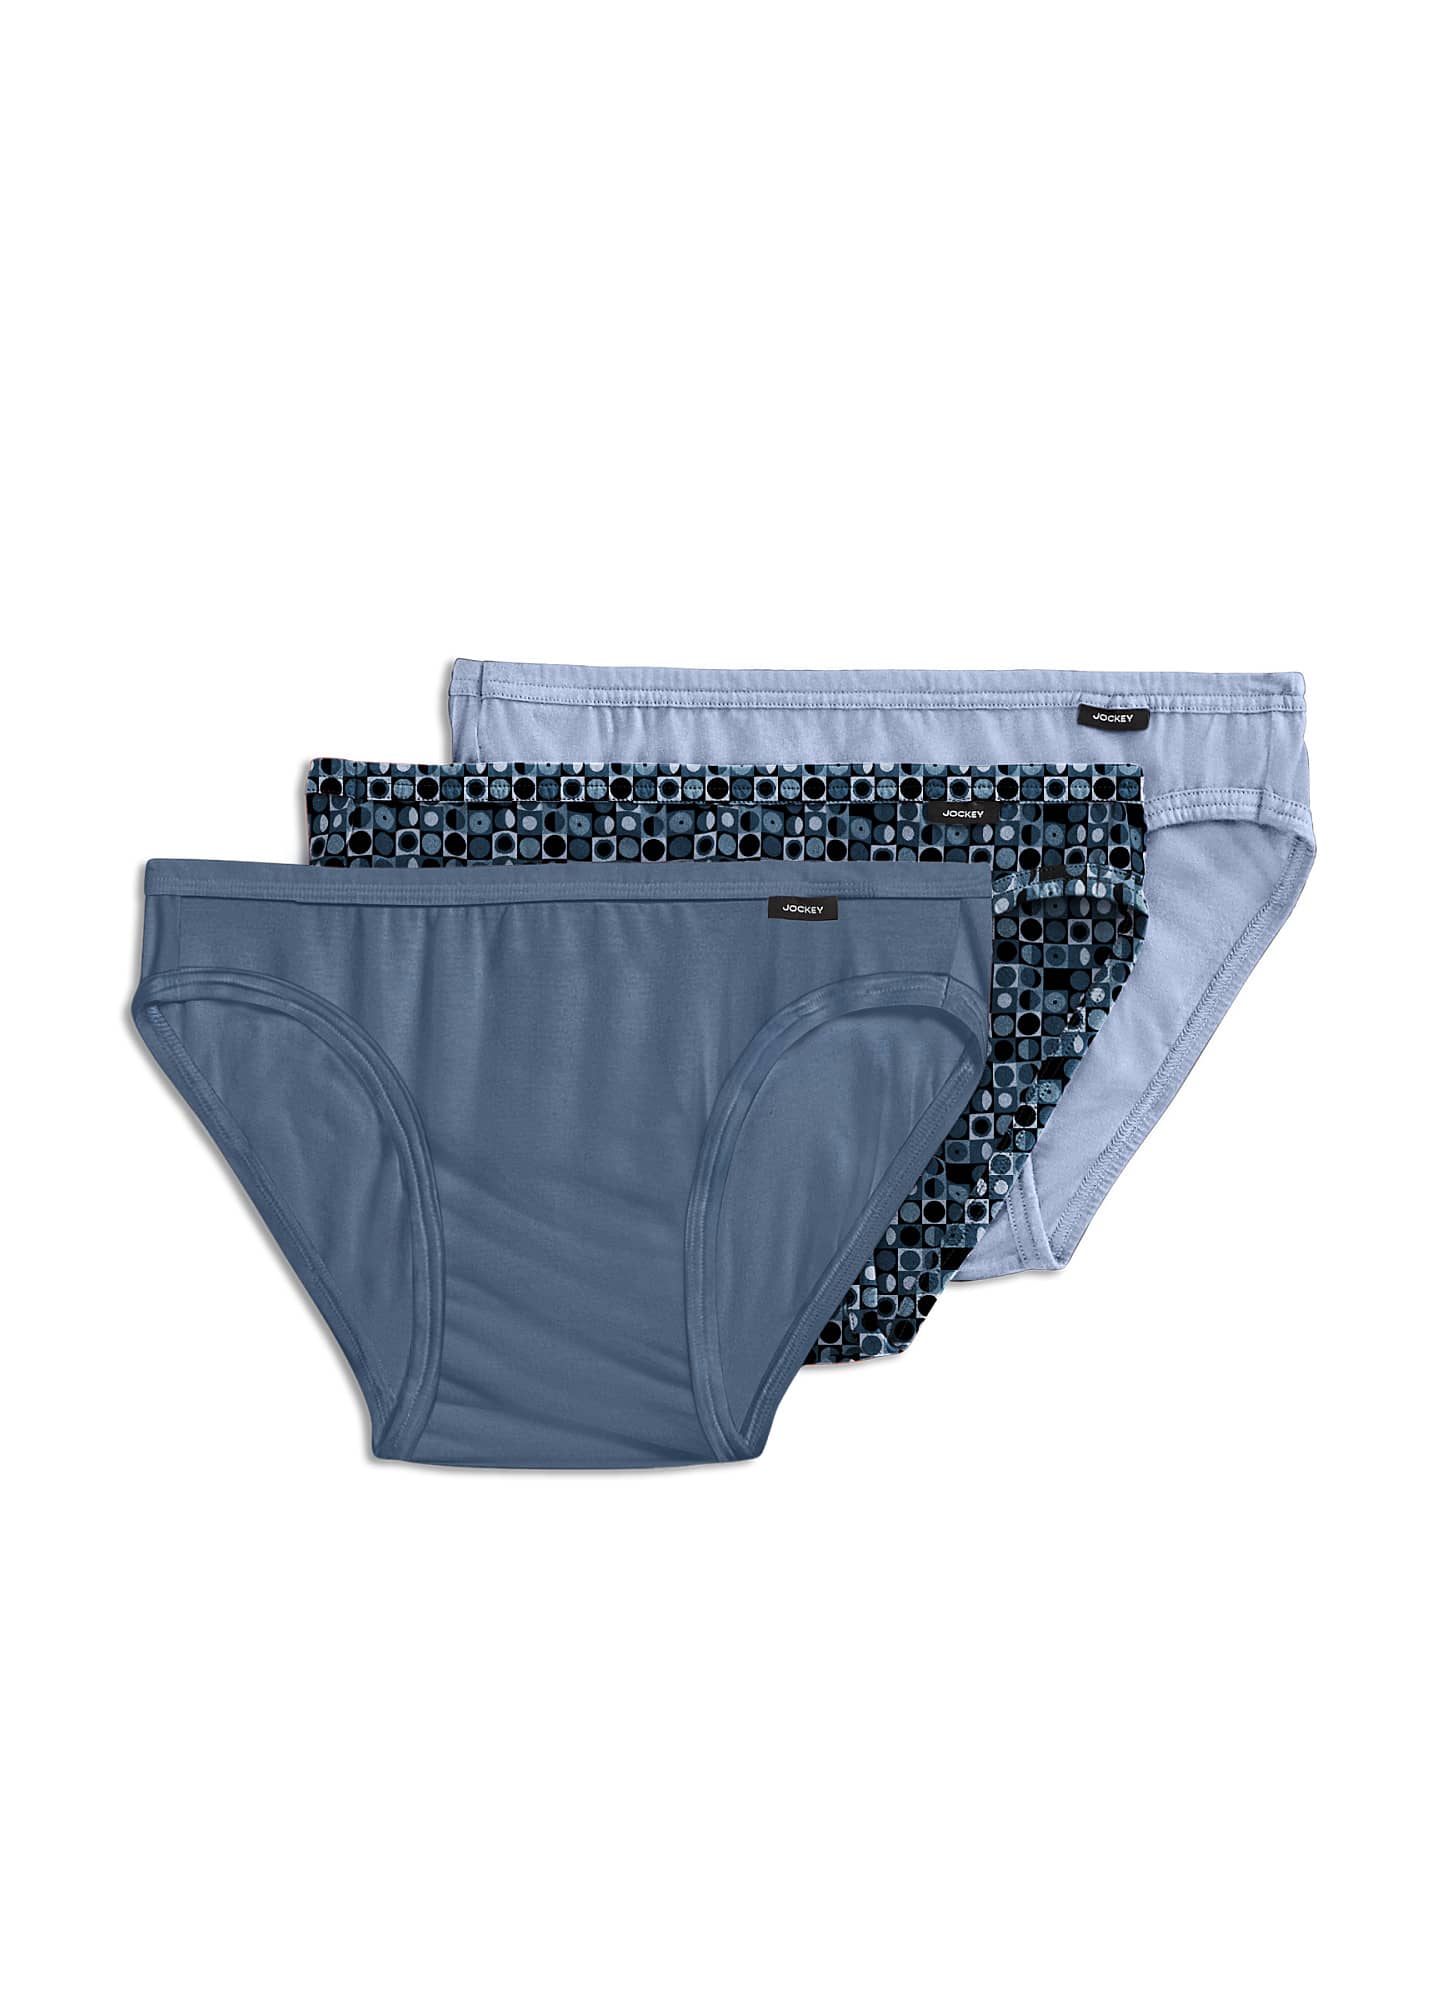 Jockey 100098010 Elance Bikini Men's Underwear, Medium - 3 Pack (Black) for  sale online